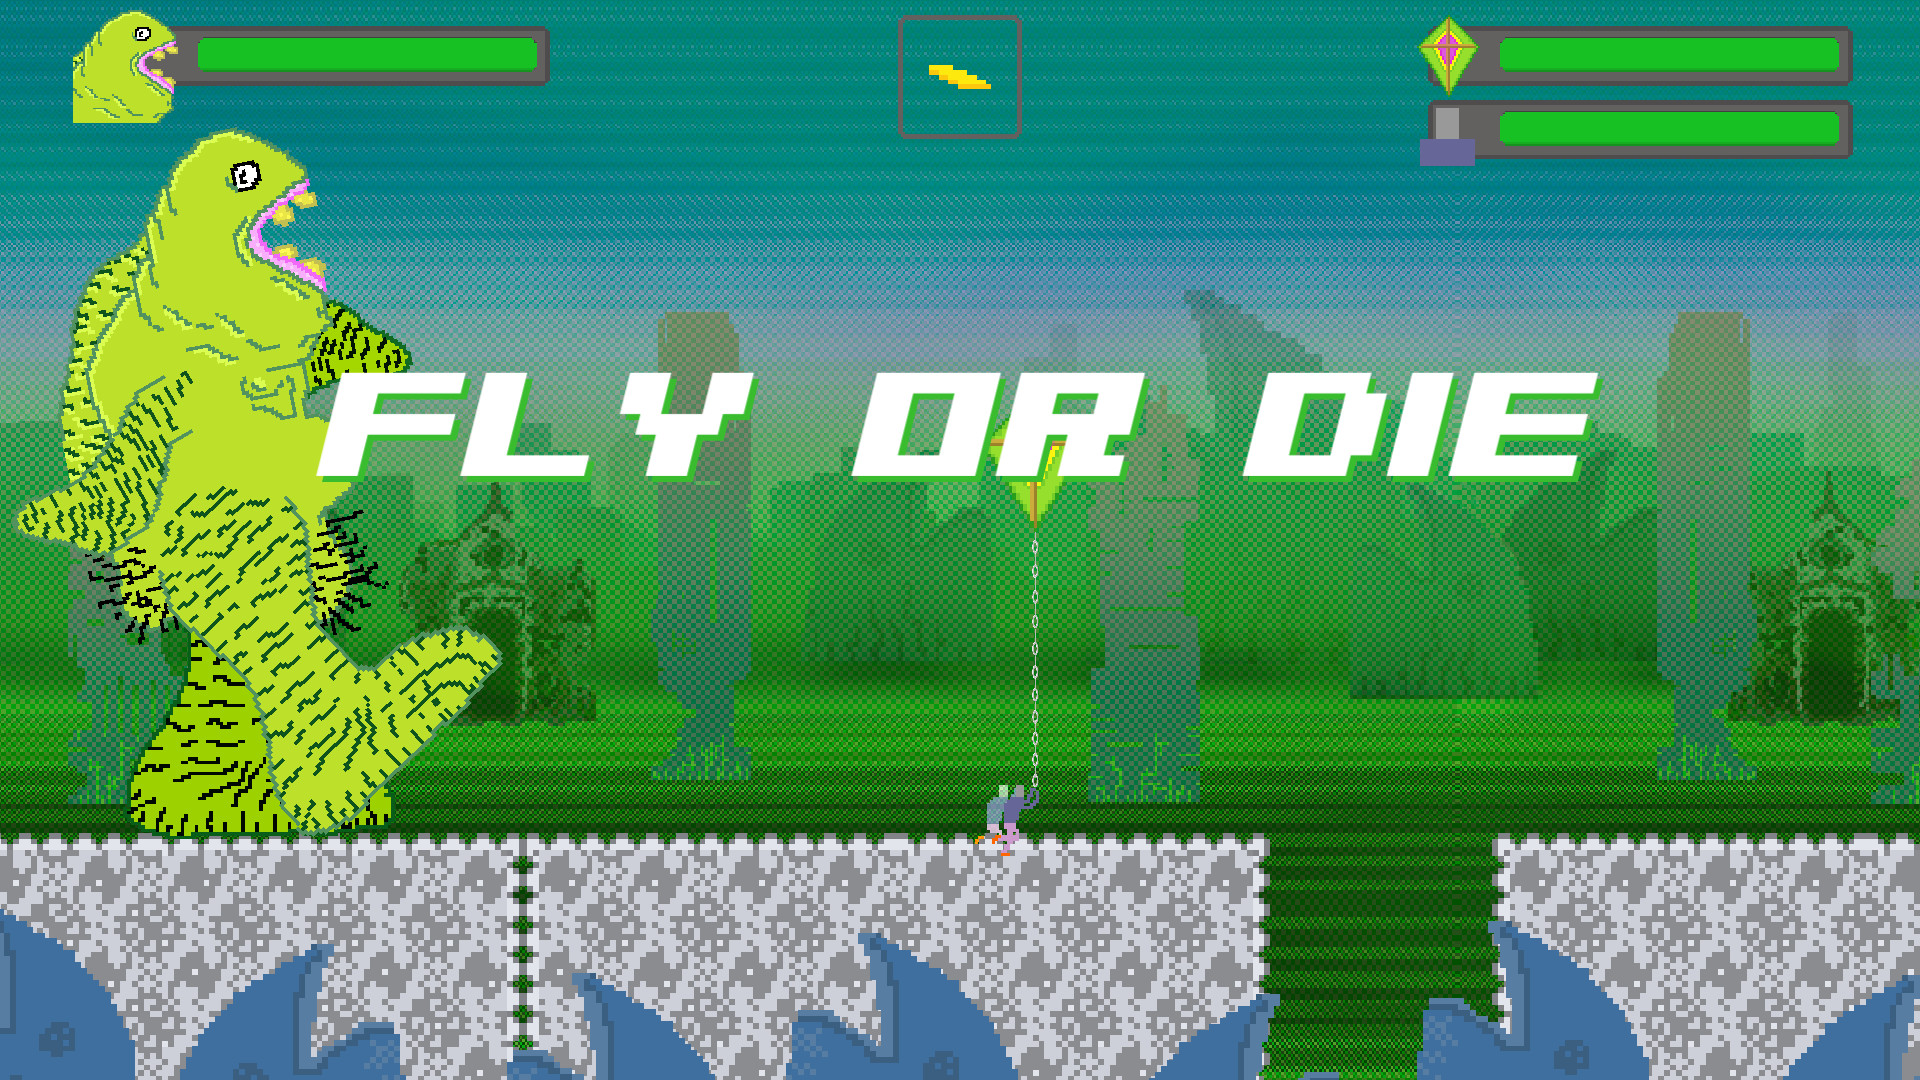 Kaiju Kite Attack screenshot